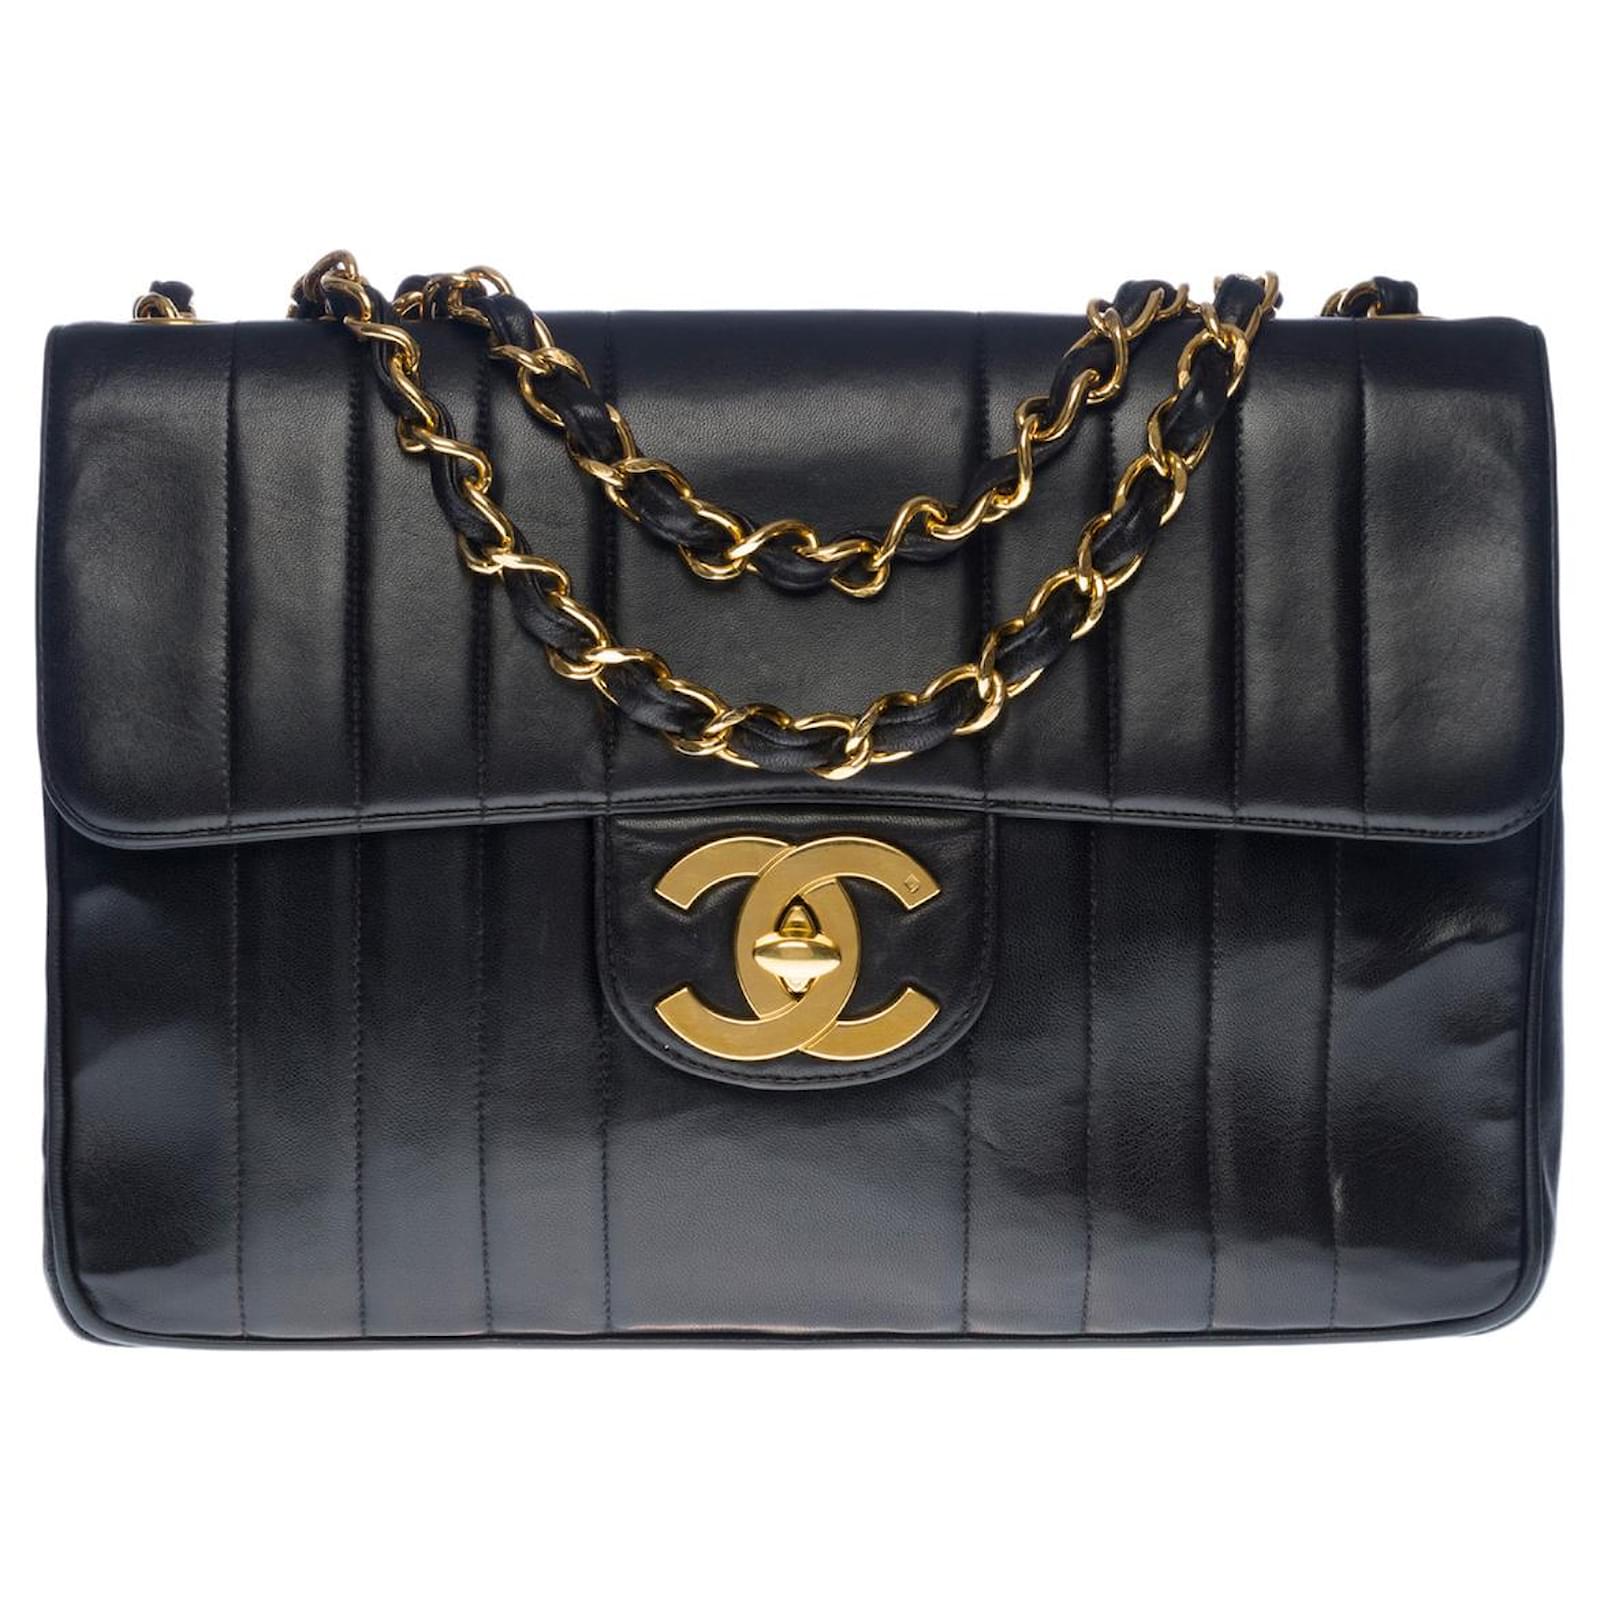 Handbags Chanel Sac Chanel Timeless/Classic Black Leather - 100515